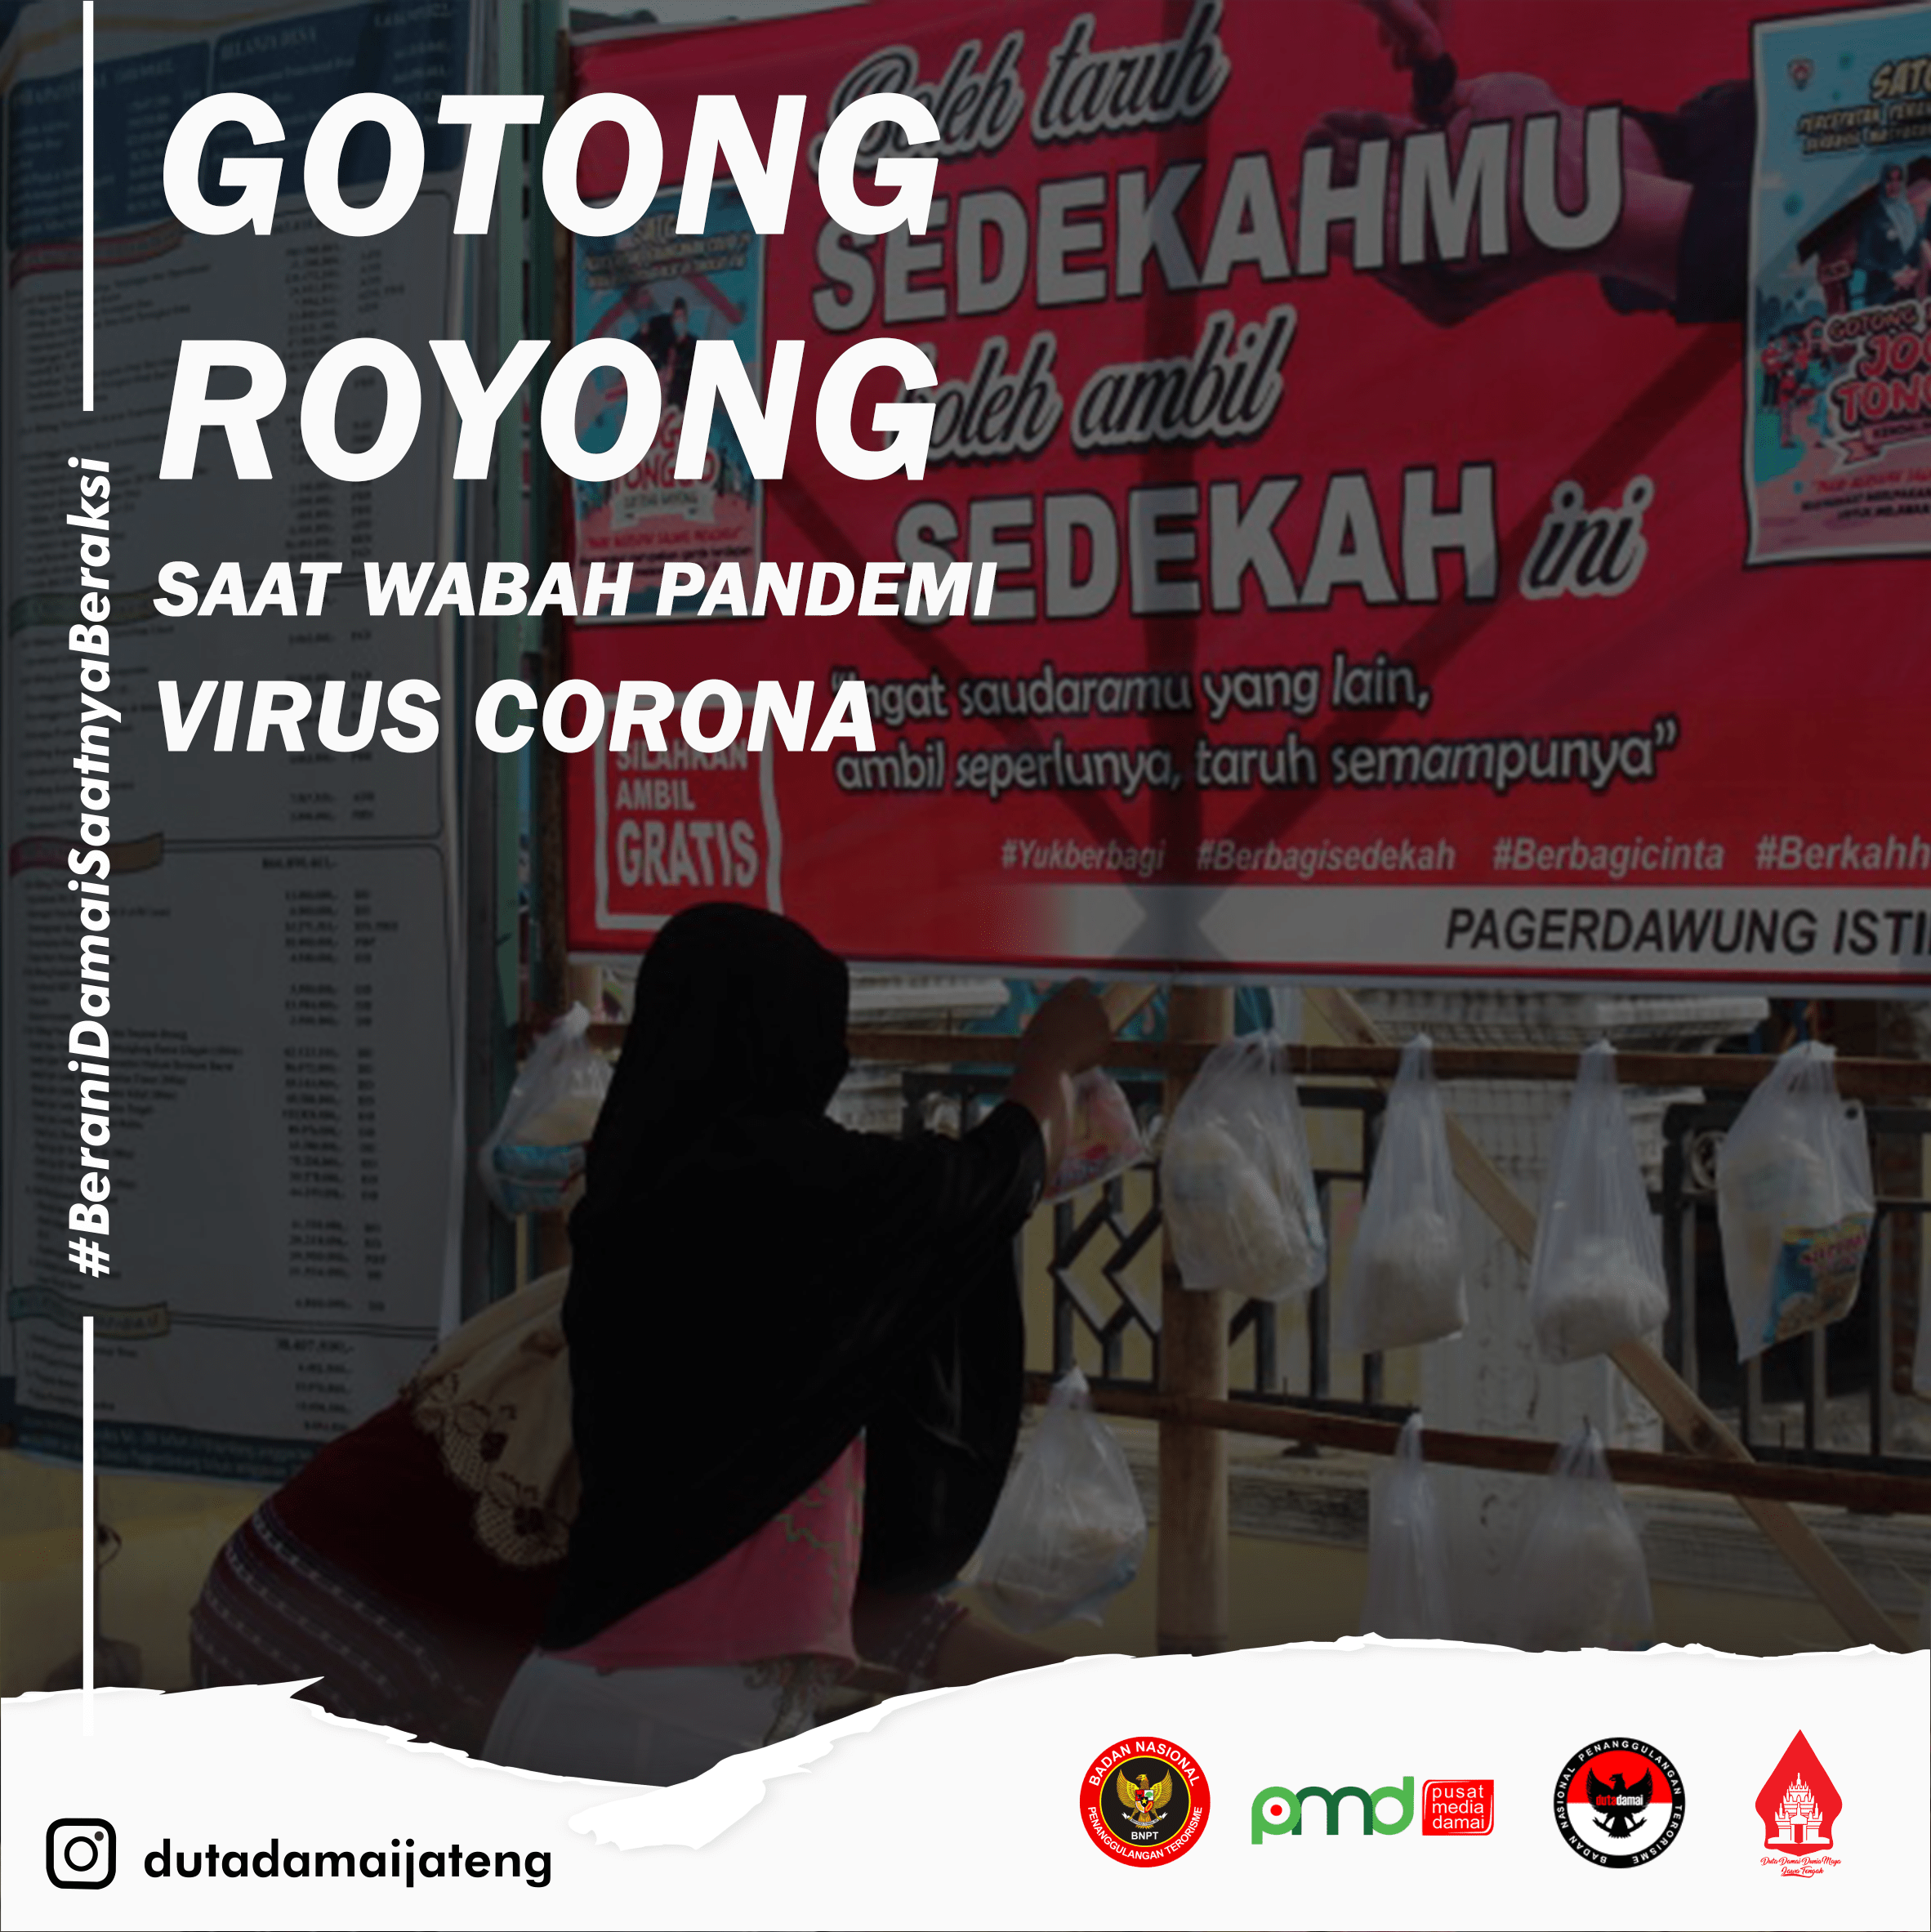 Gotong Royong saat Kondisi Pandemi Corona